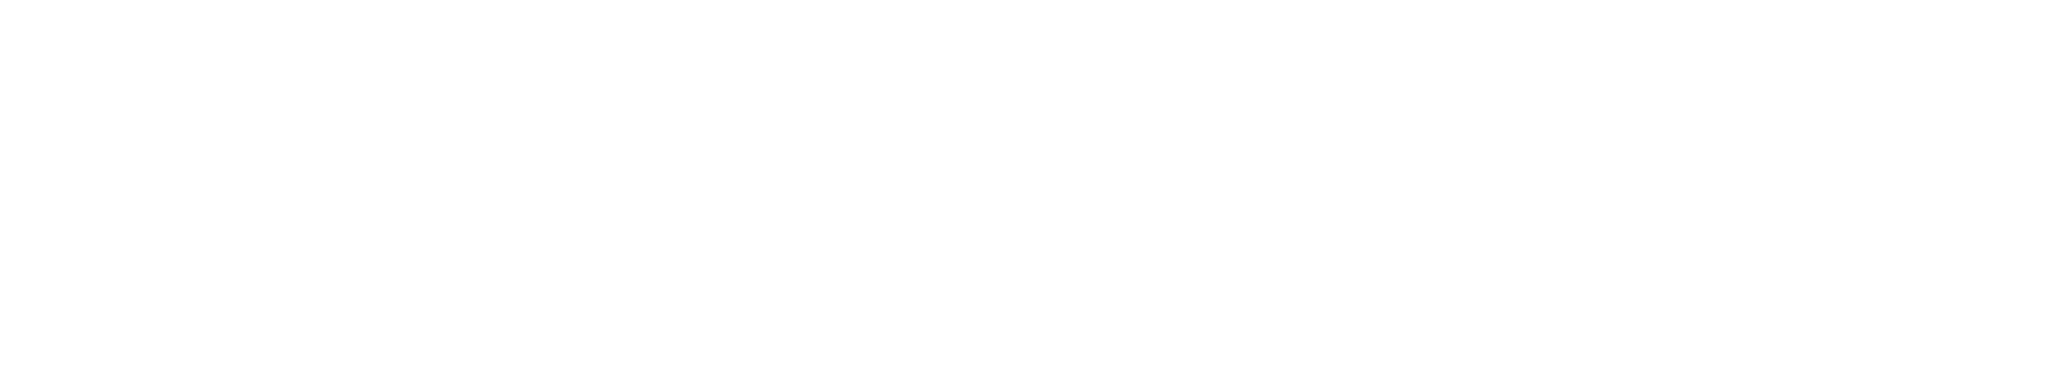 Steve Mc Queen Eyewear